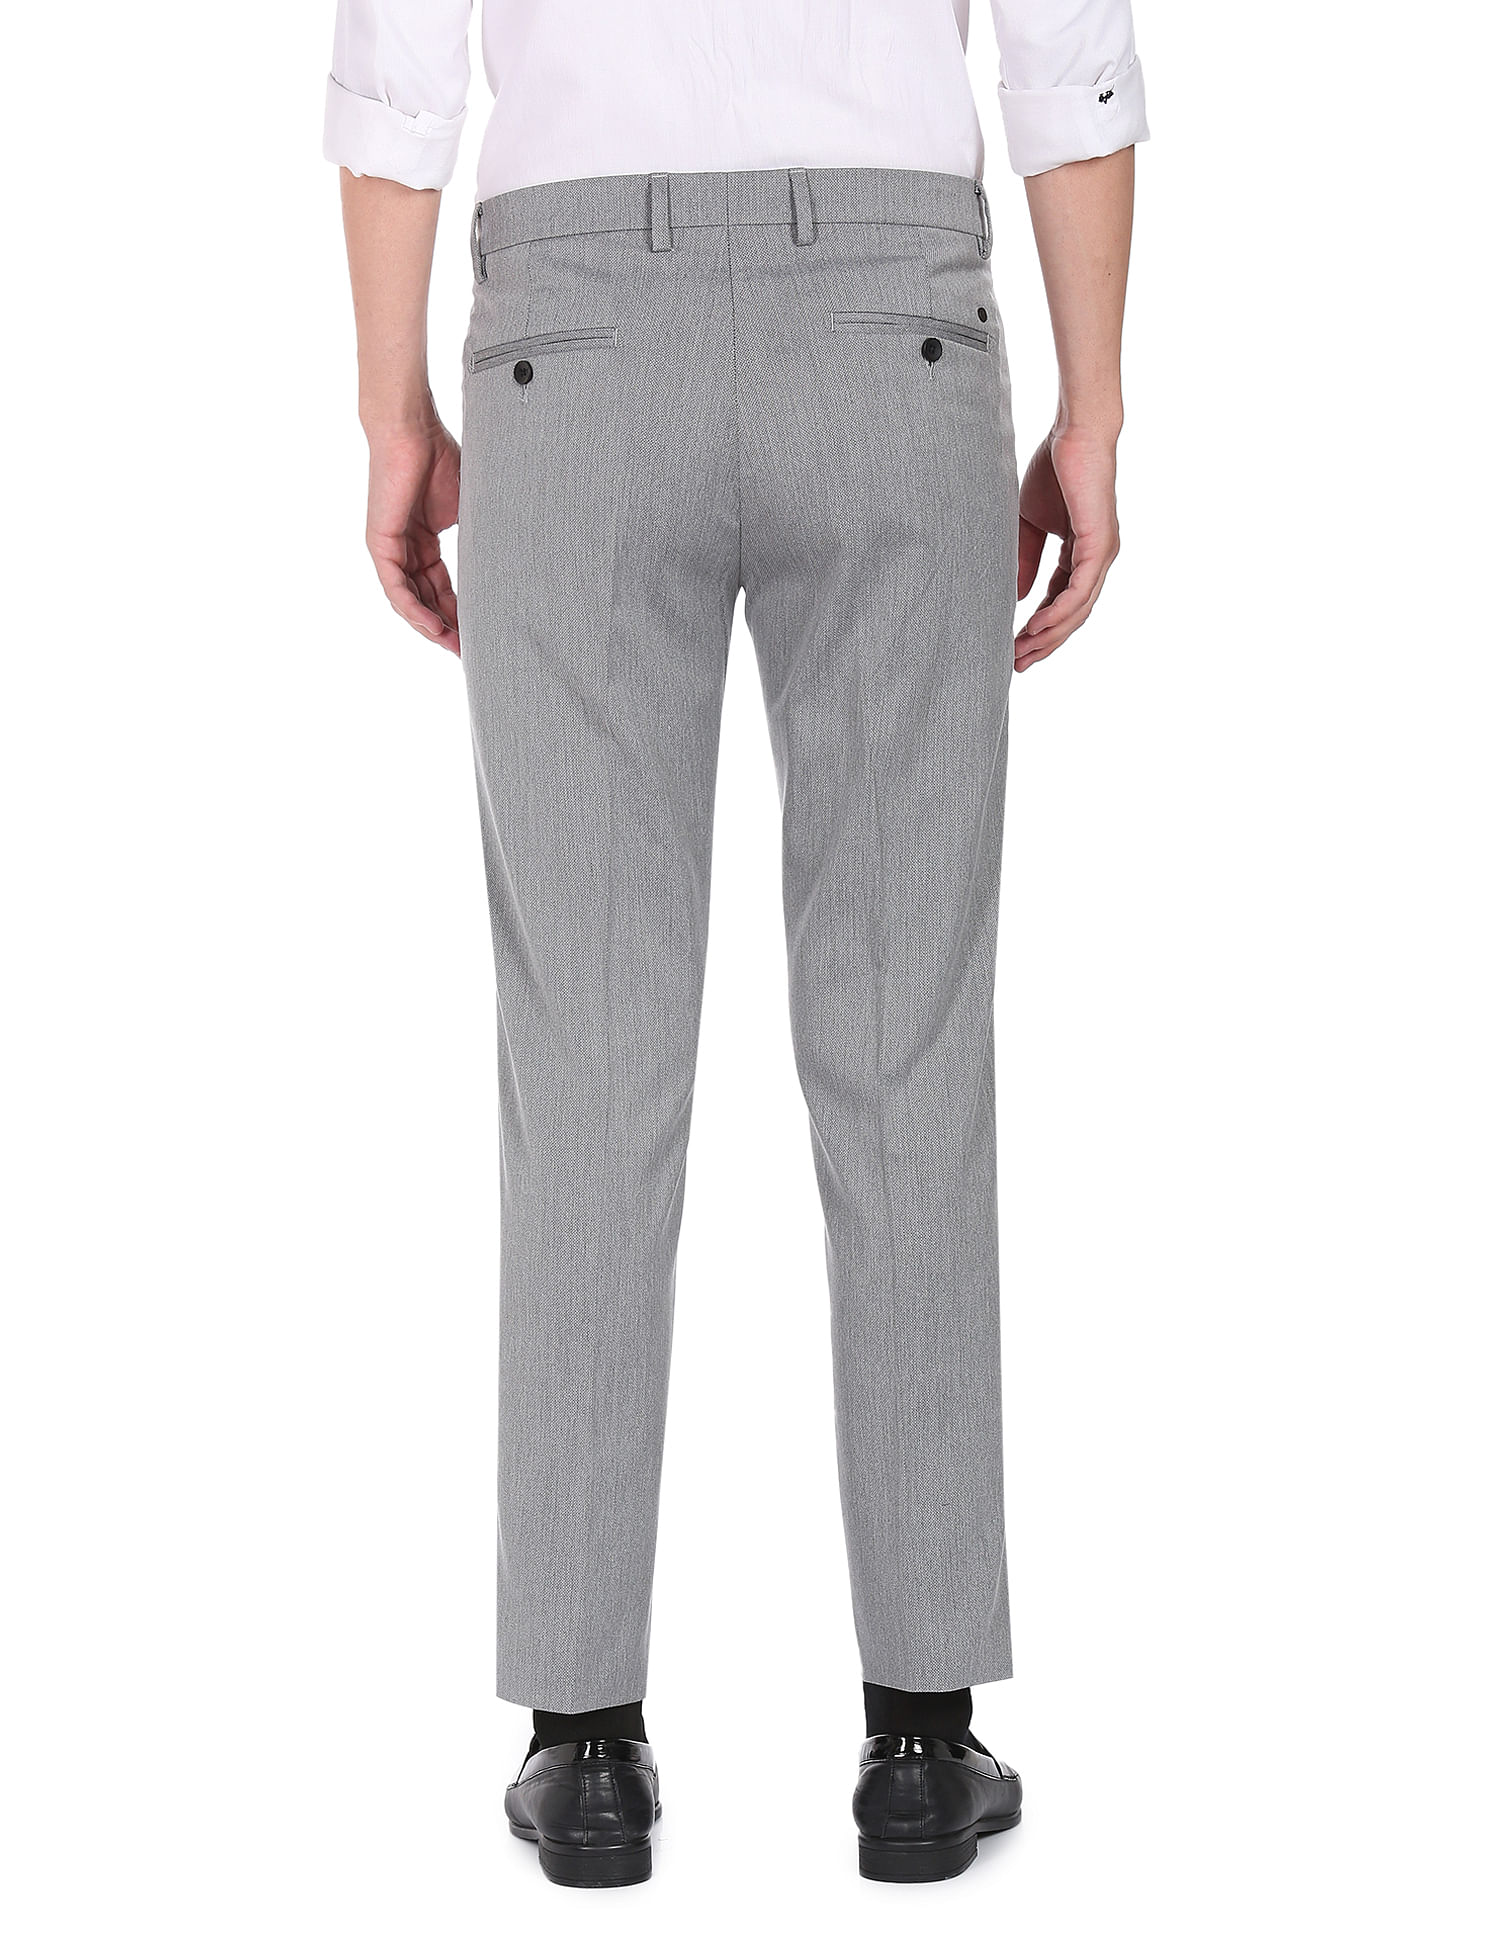 Mancrew Slim Fit Formal Pant for men  Formal Trousers  Light Grey Black  Combo Pack Of 2